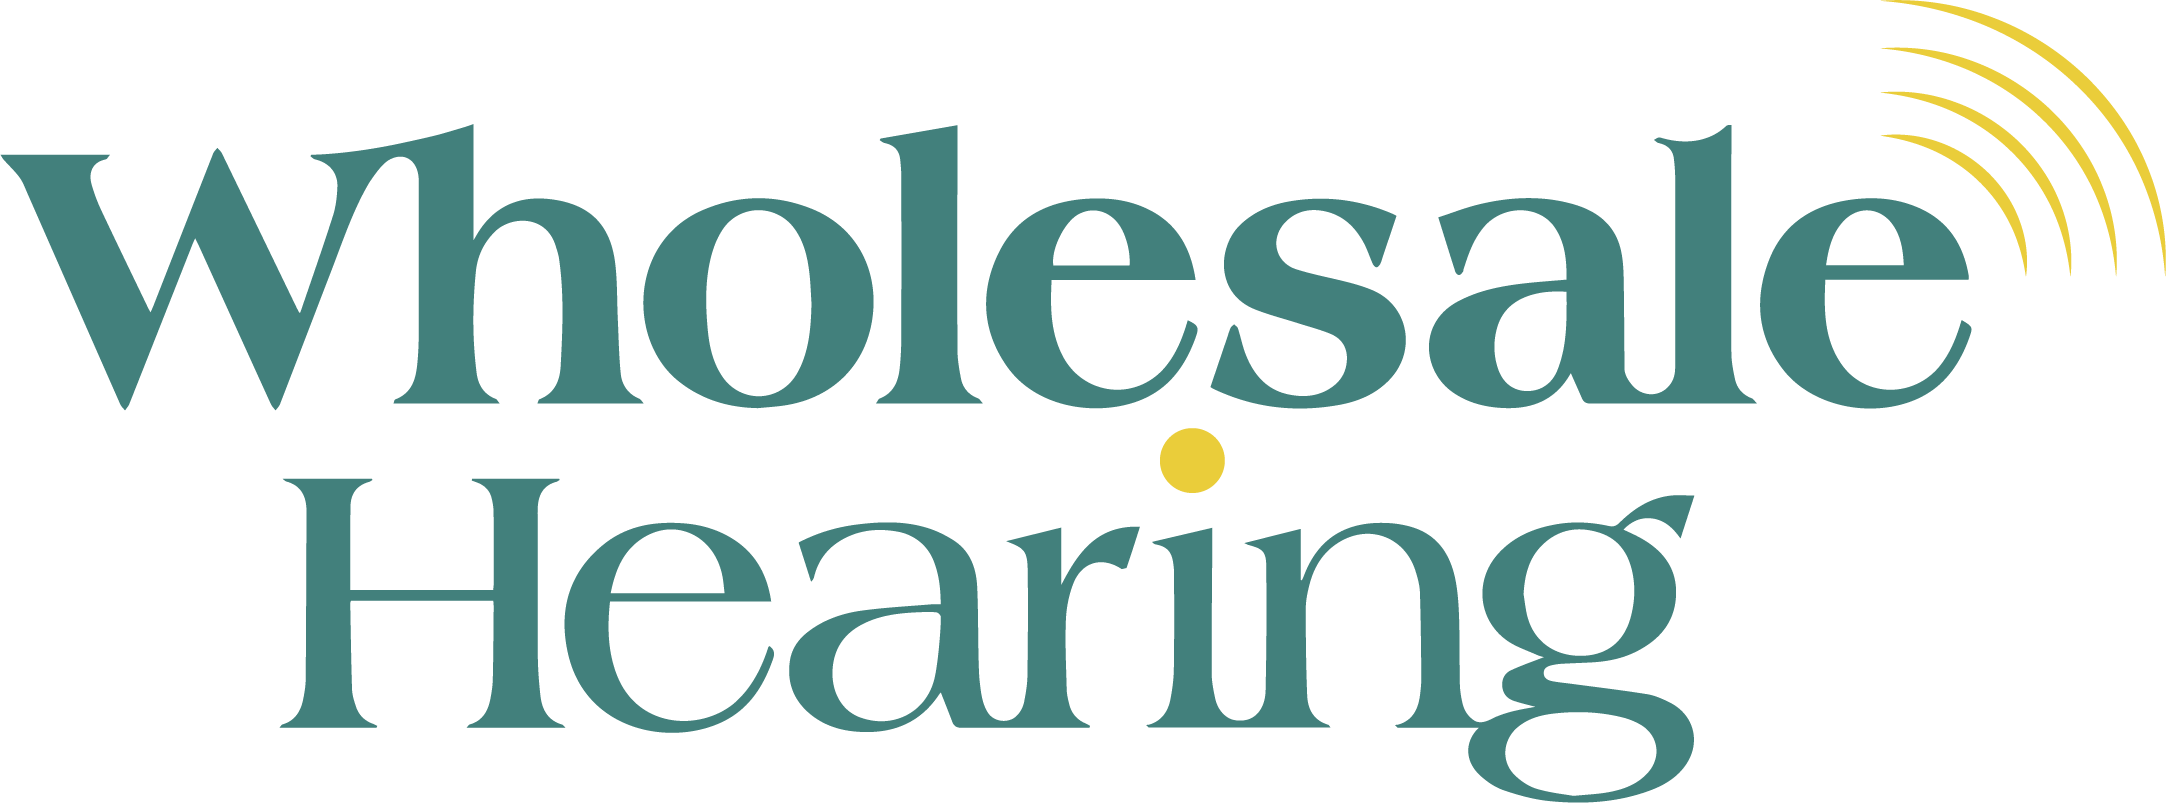 Wholesale Hearing